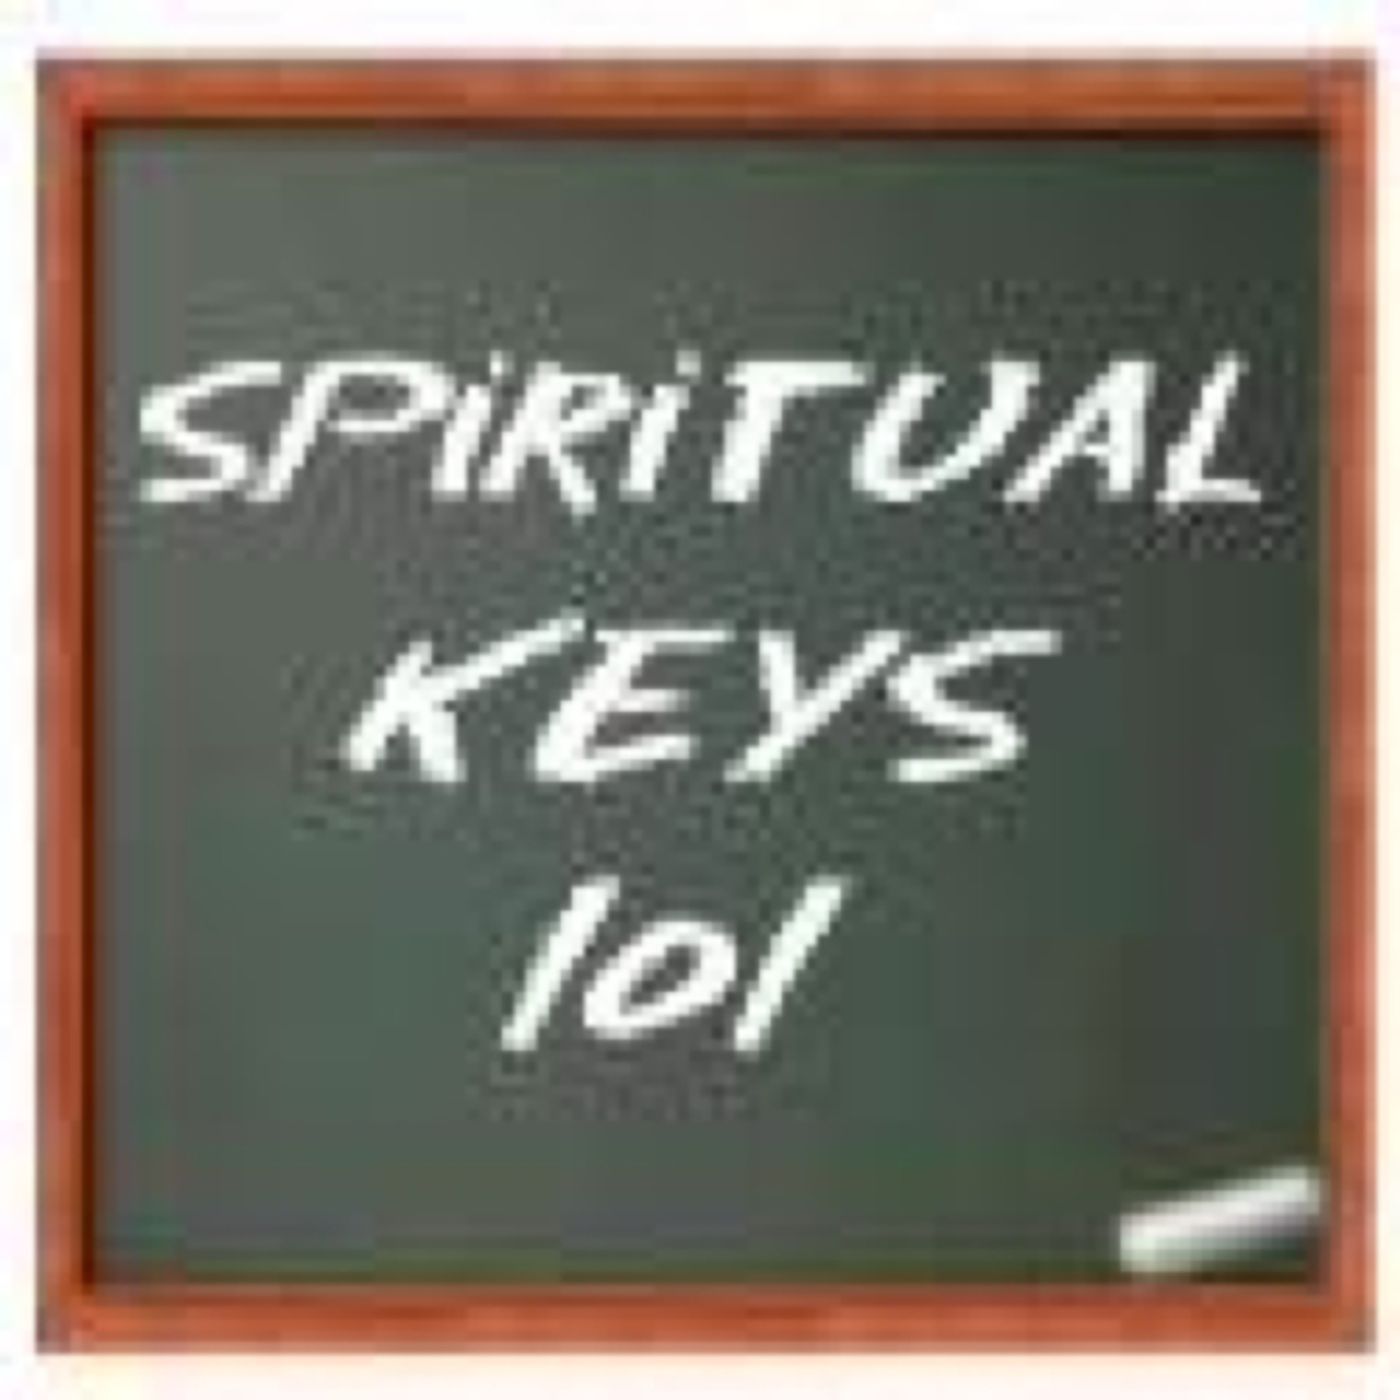 Spiritual Keys